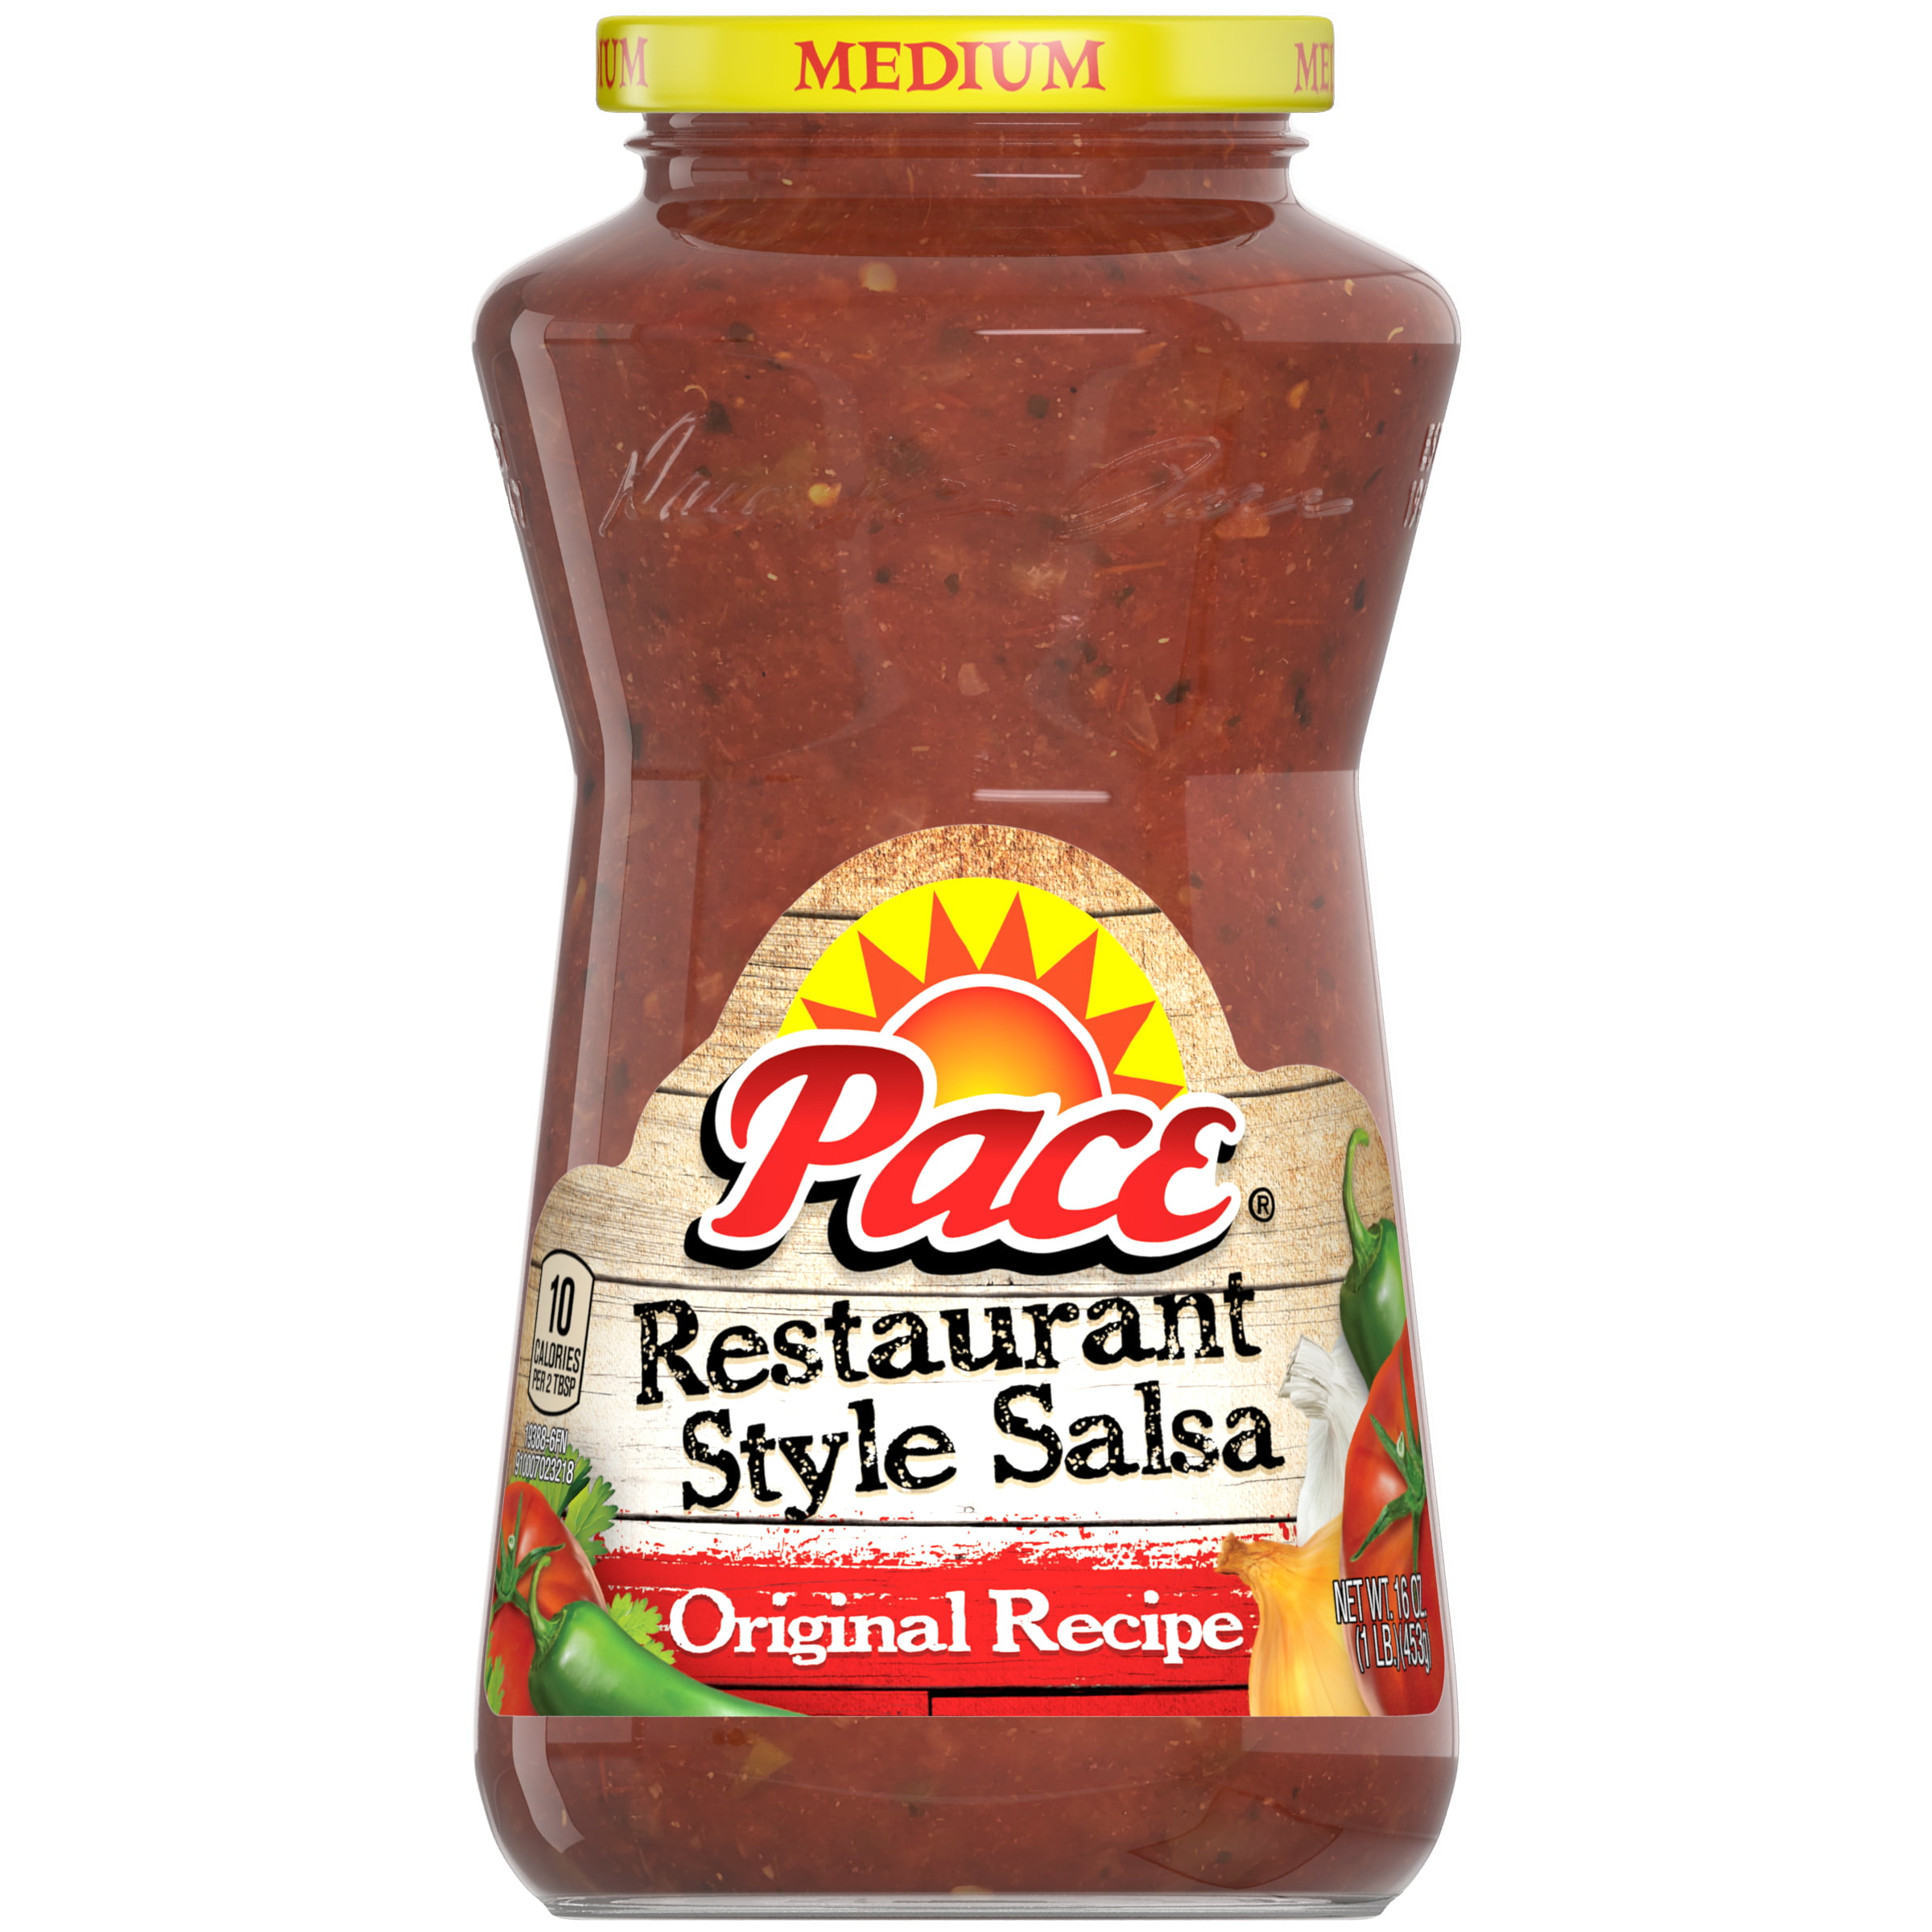 Pace Salsa Restaurant Style Original Recipe Medium Salsa